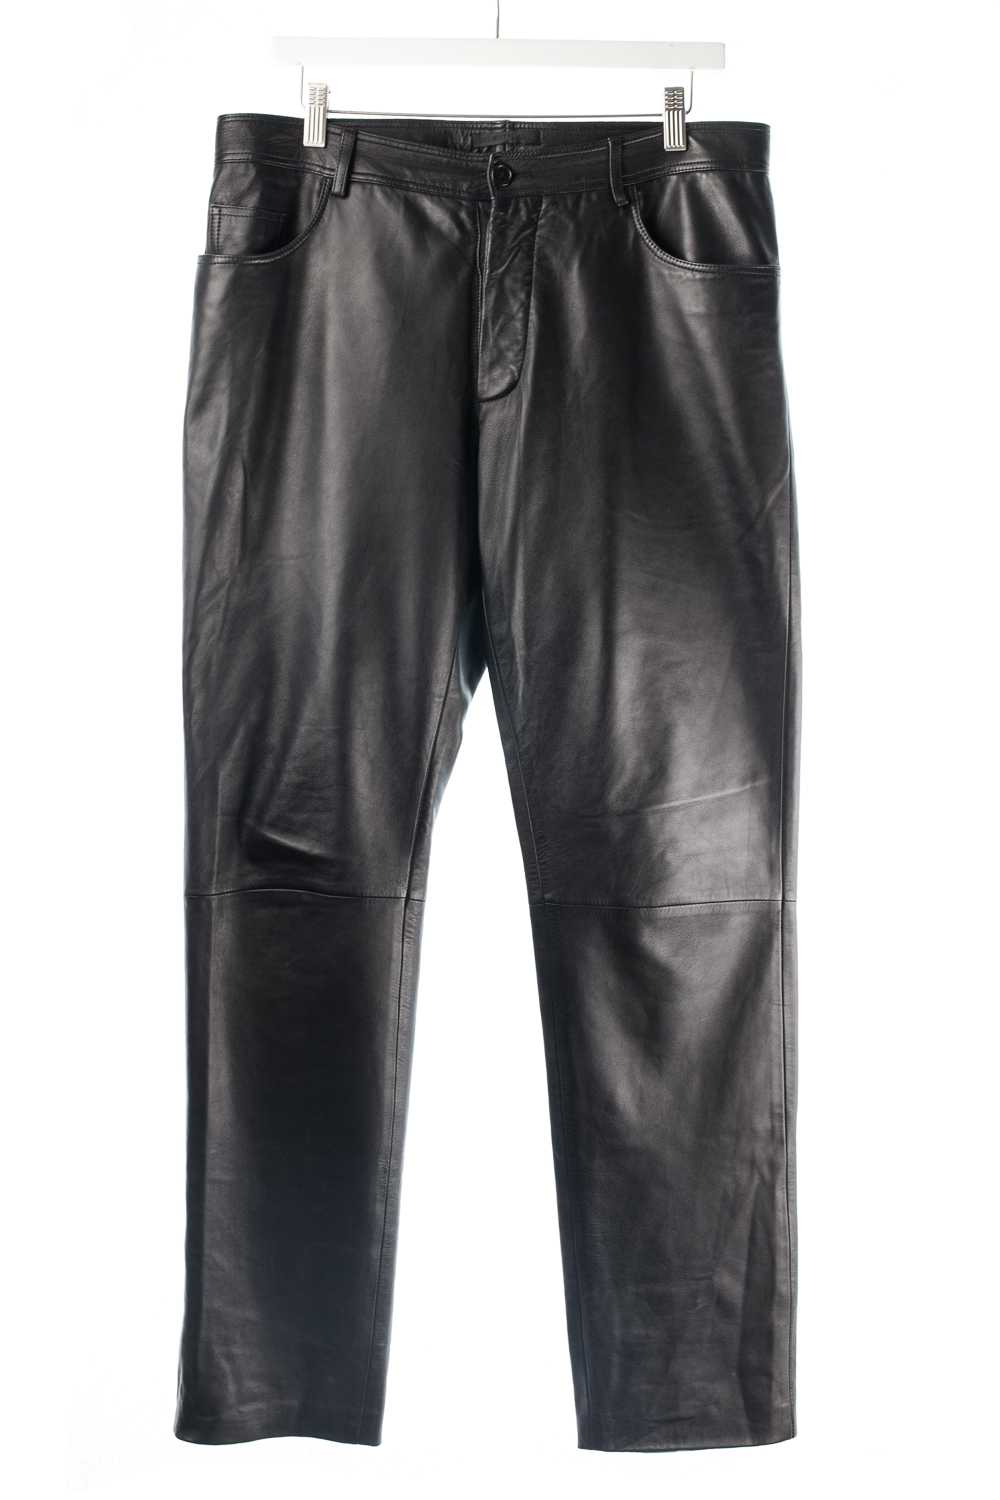 FW03 Calf Leather Pants - Gem